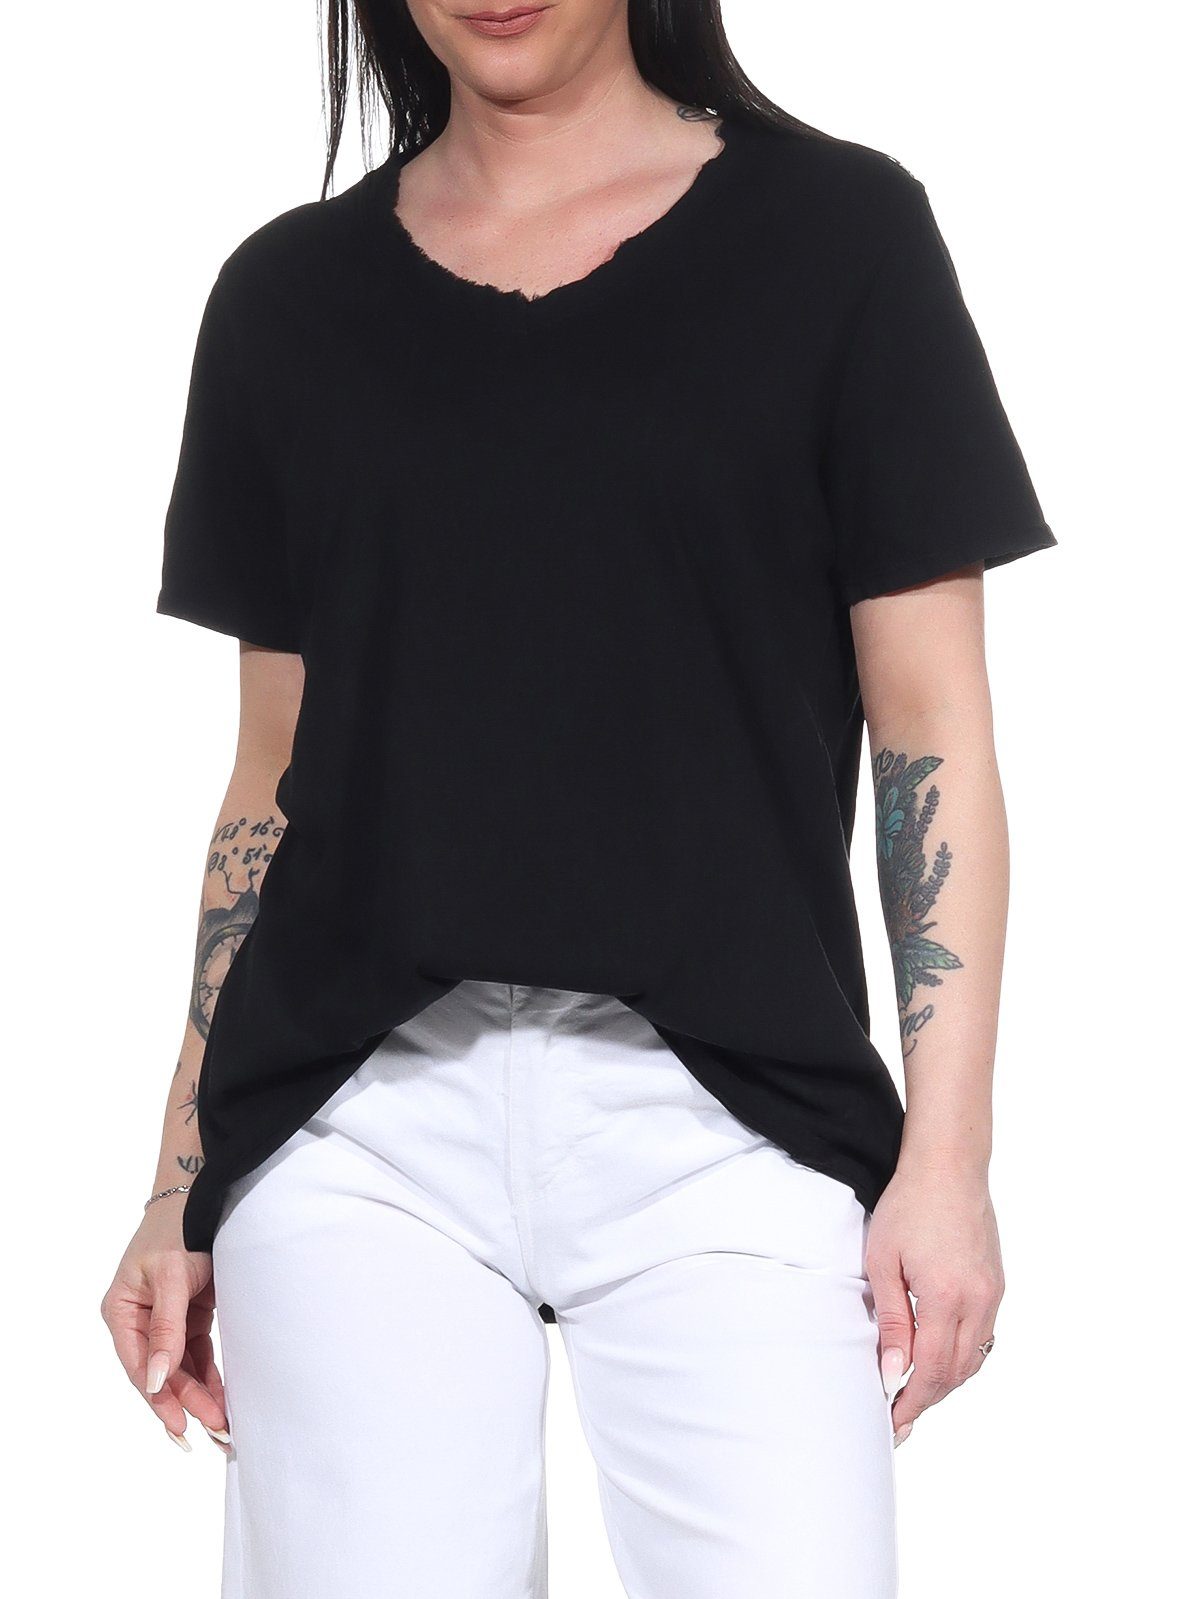 Aurela Damenmode T-Shirt »V-Ausschnitt Sommershirt für Damen leichtes &  luftiges T-Shirt« moderner Fransen-Ausschnitt online kaufen | OTTO